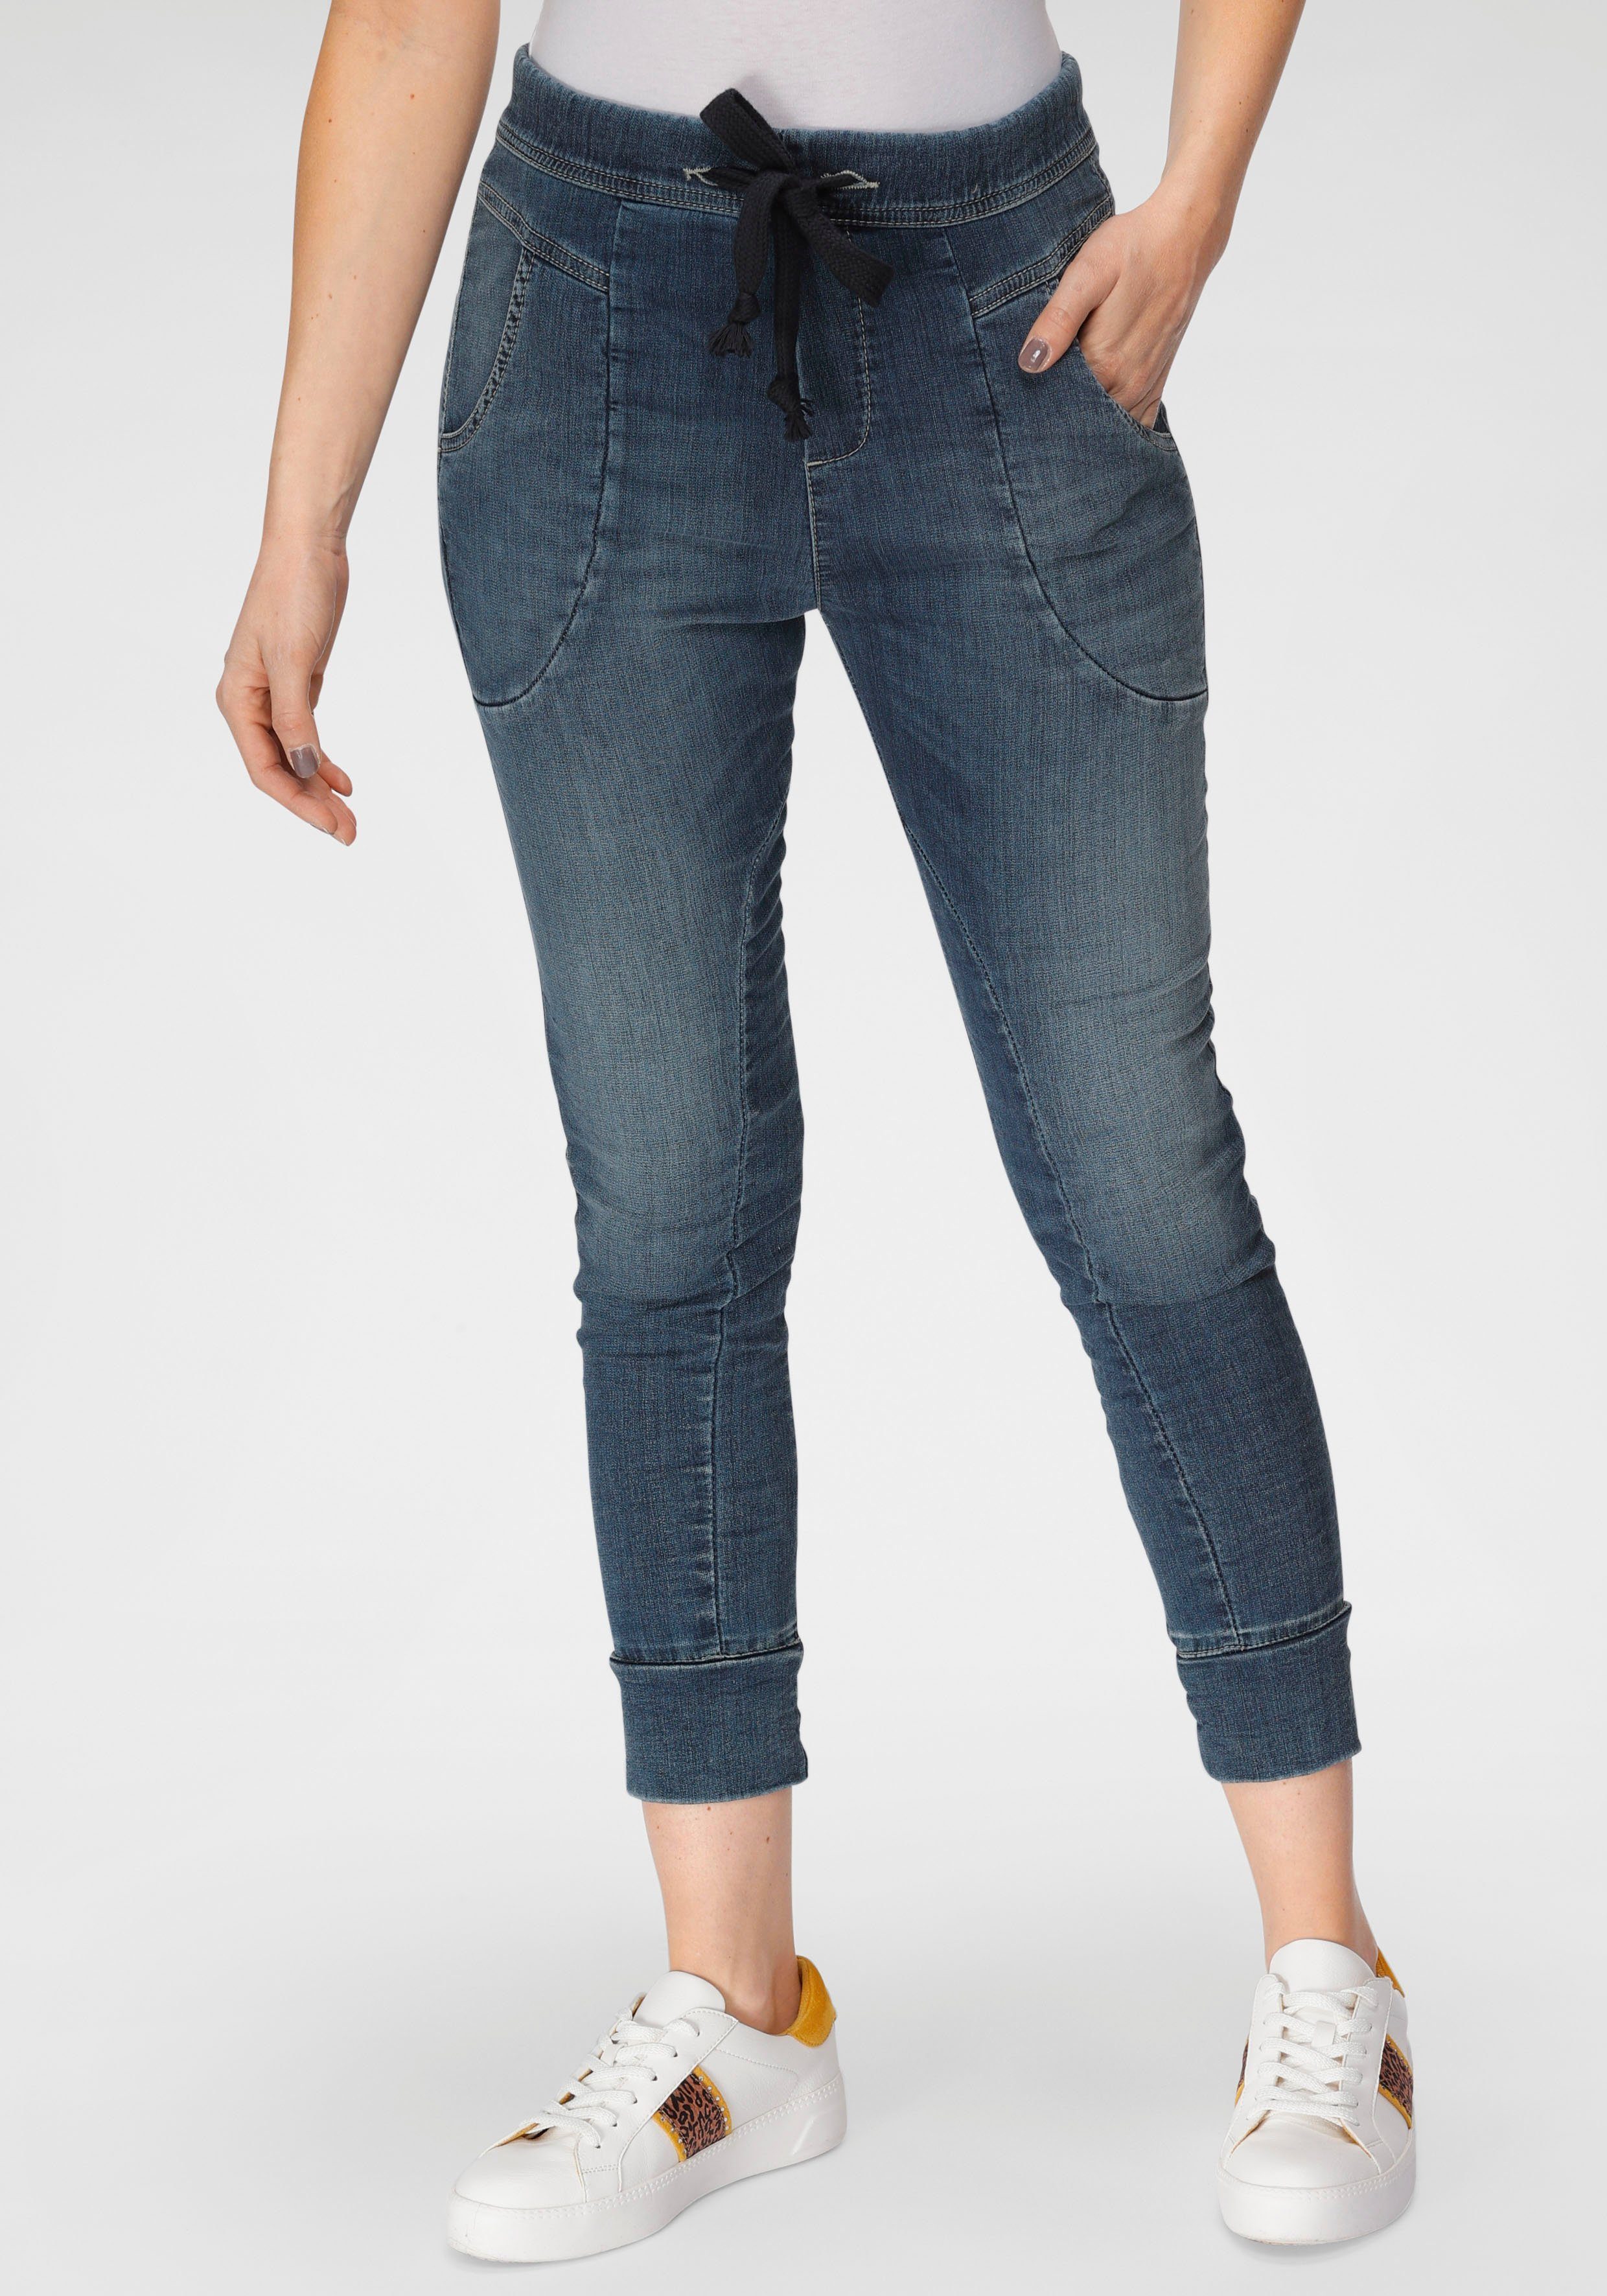 Please Jeans Jogg Pants P 51G im authentischem Denim Used-Look